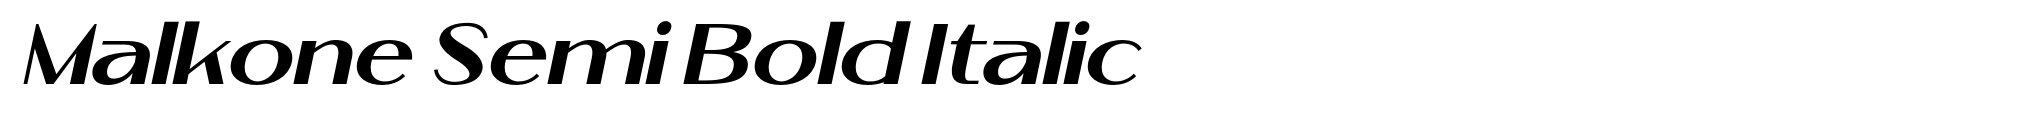 Malkone Semi Bold Italic image